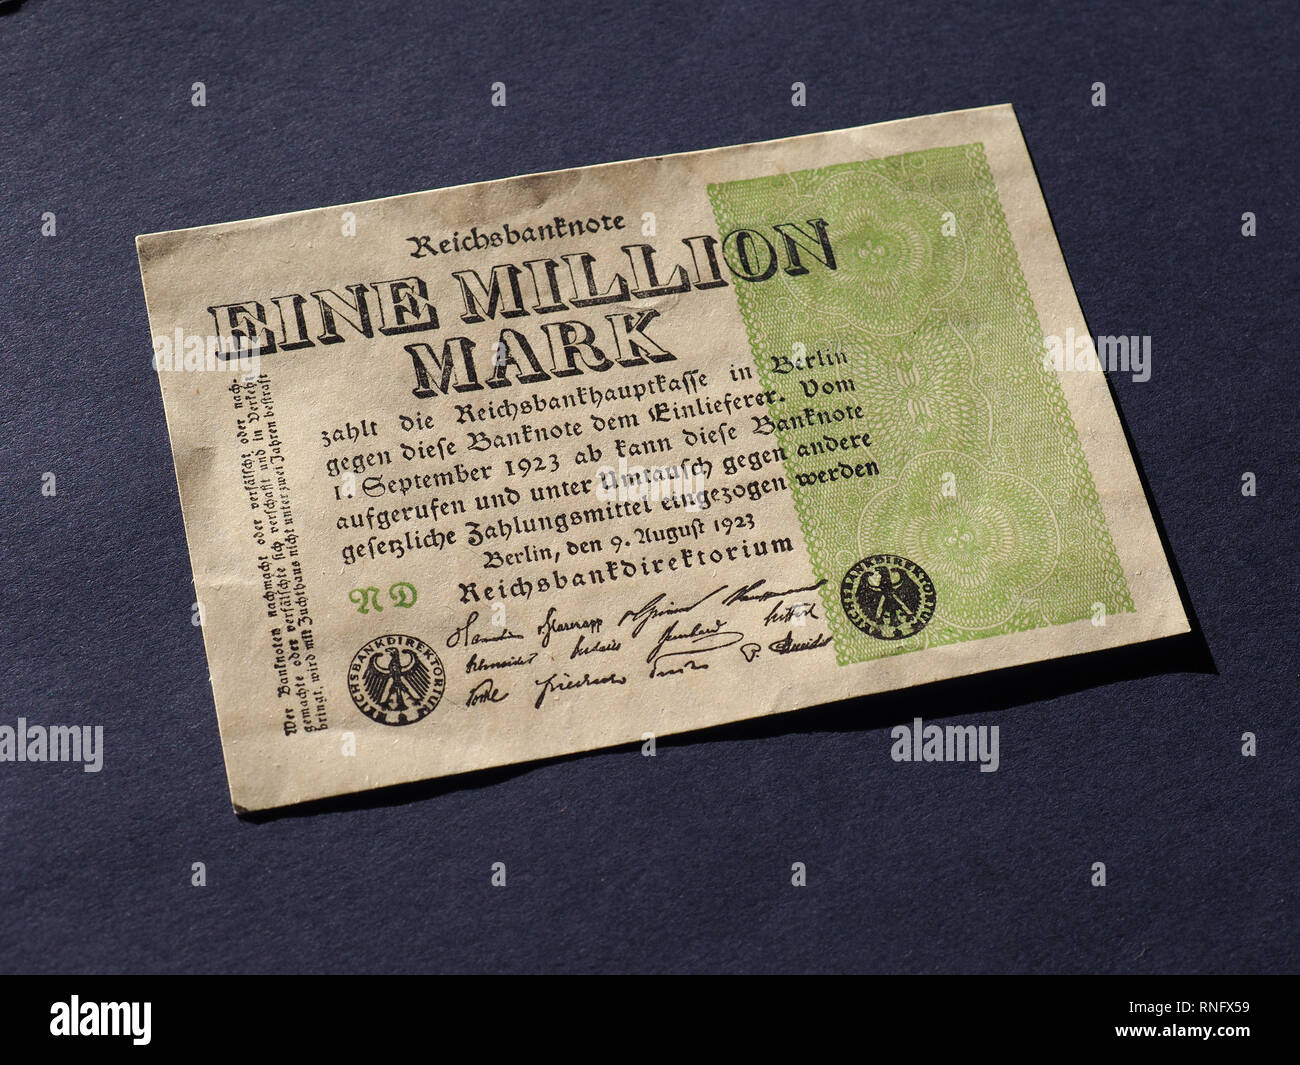 Eine Million Mark (meaning One Million Mark) year 1923 banknote inflation money from Weimar Republic Stock Photo